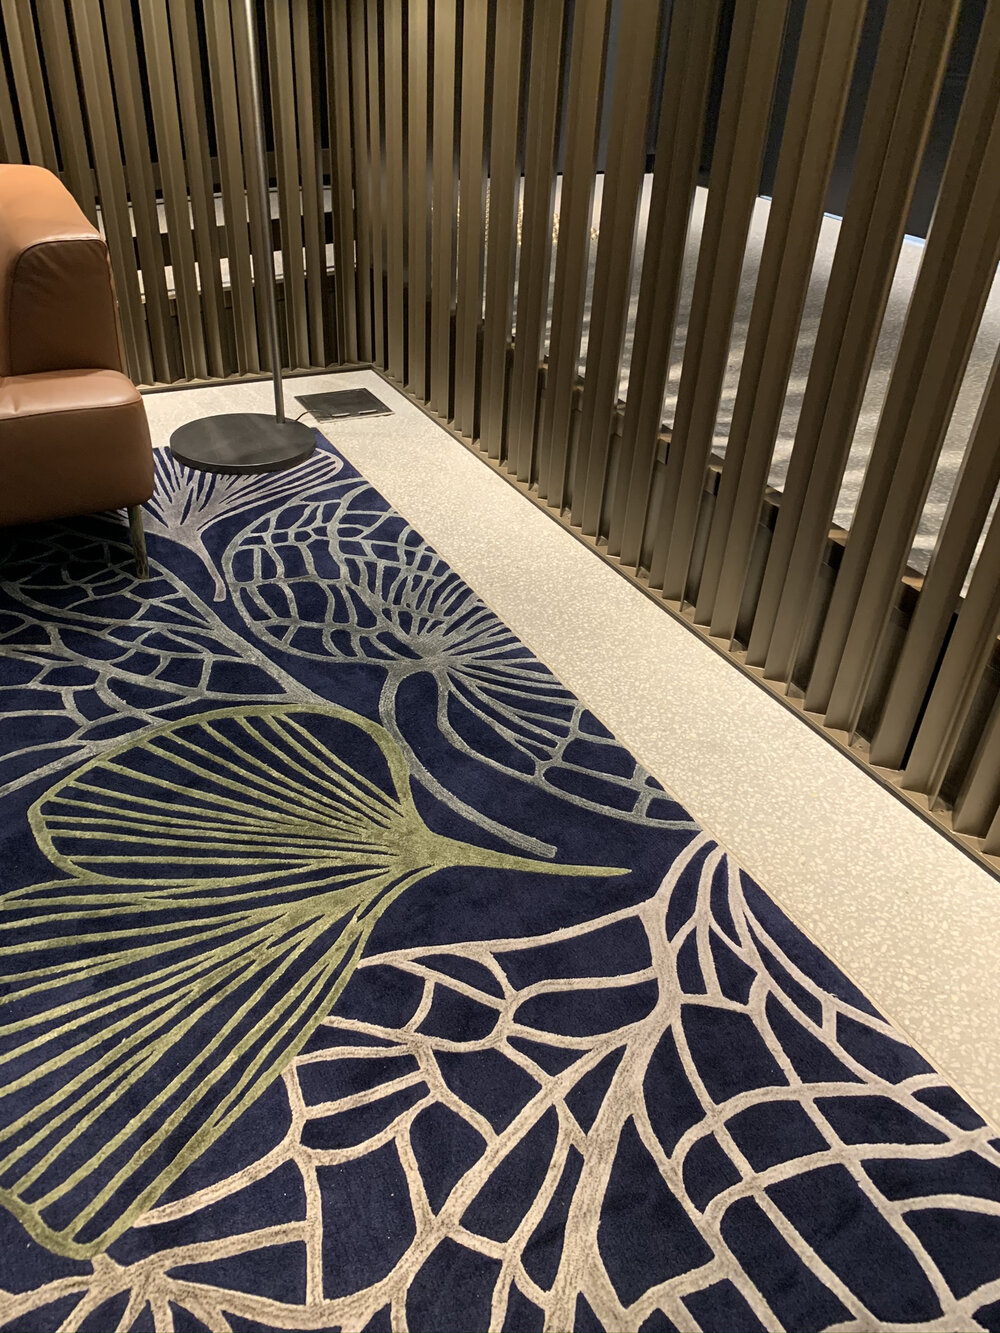 West Hotel Lift Foyer Carpet brass leather details.jpg